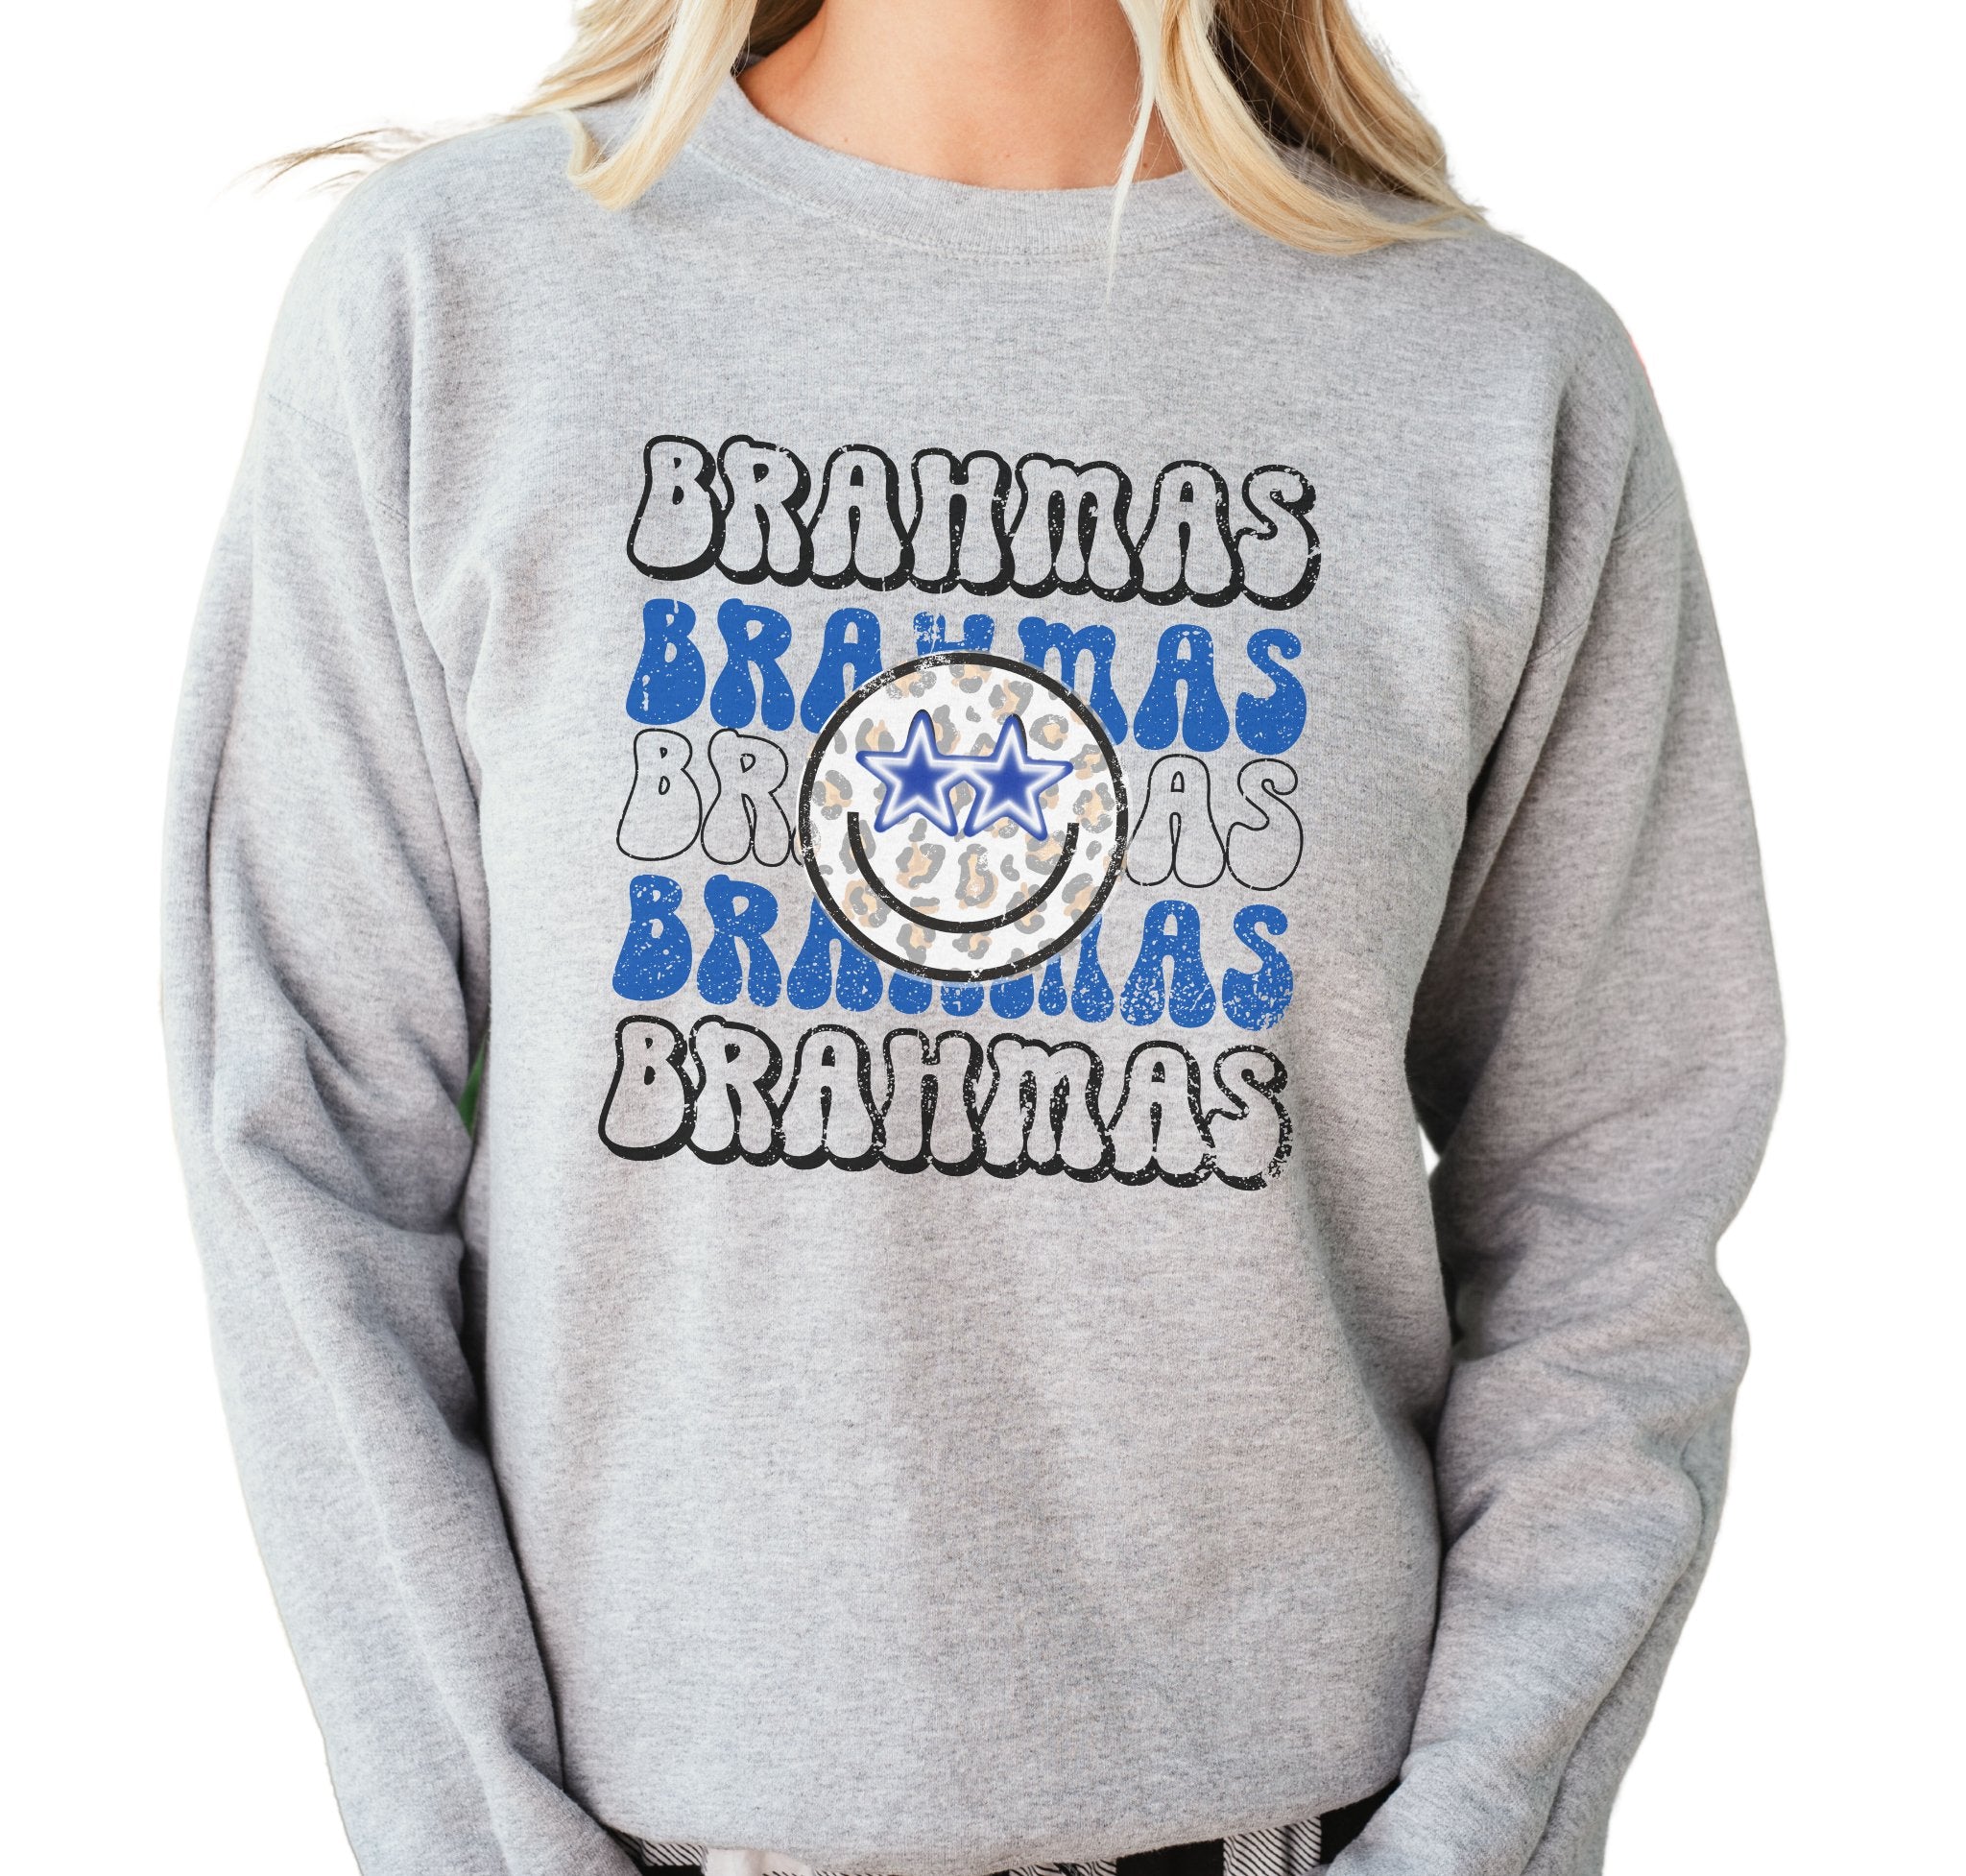 Smiley Face Brahmas Adult Sweatshirts - Trendznmore